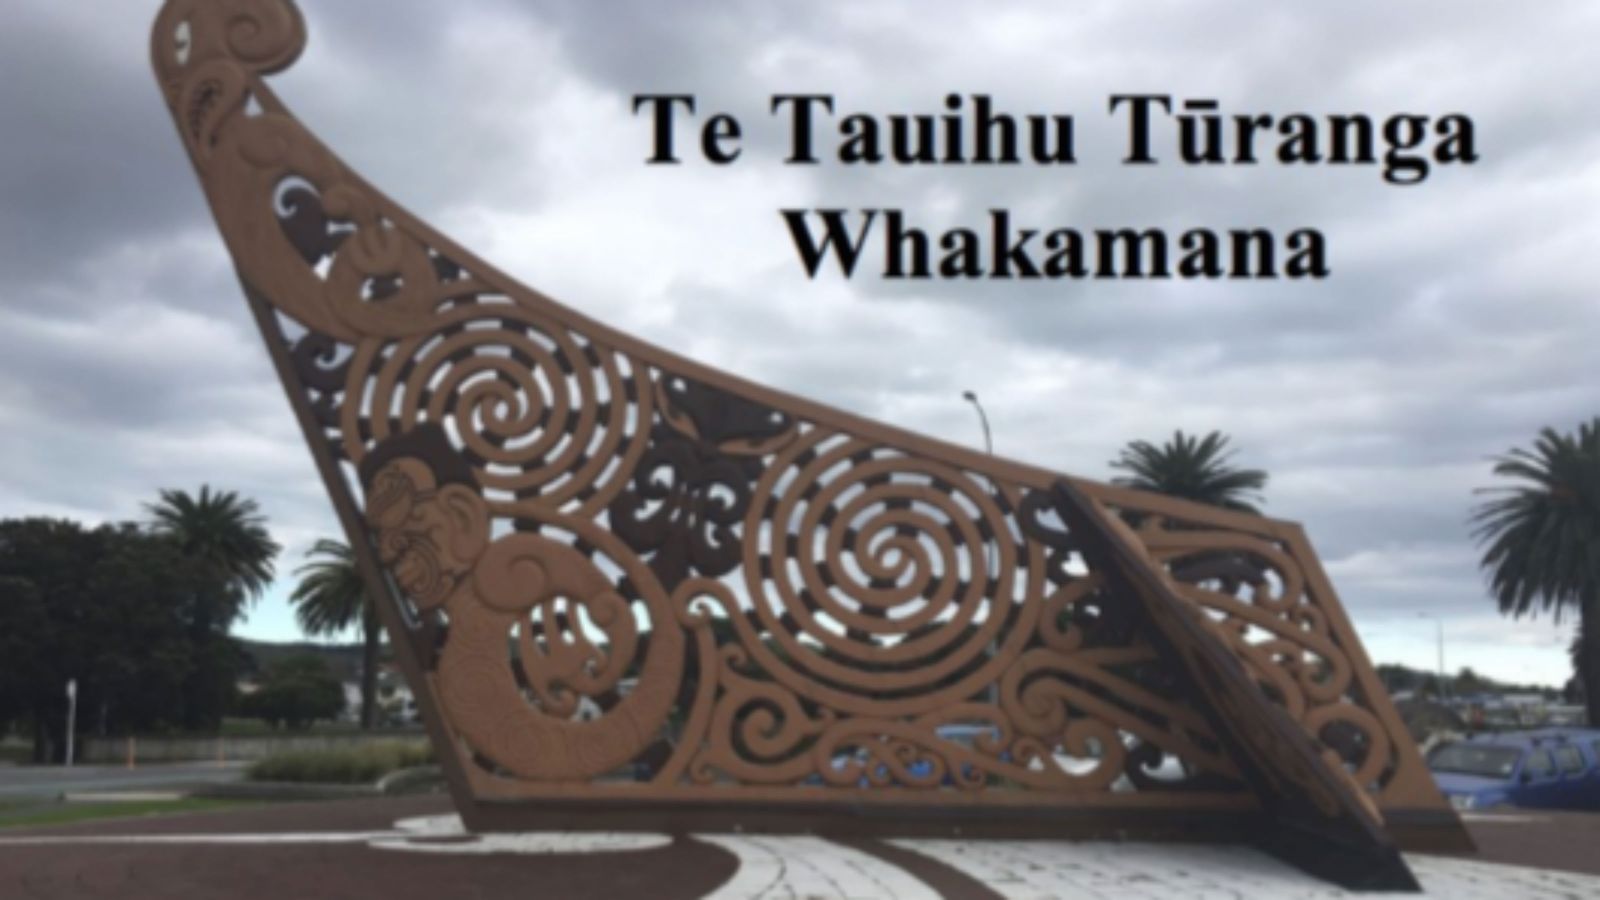 A unique shape of an artistic work that looks like the bow of a ship, with text that reads, Te Tauihu Tūranga Whakamana.